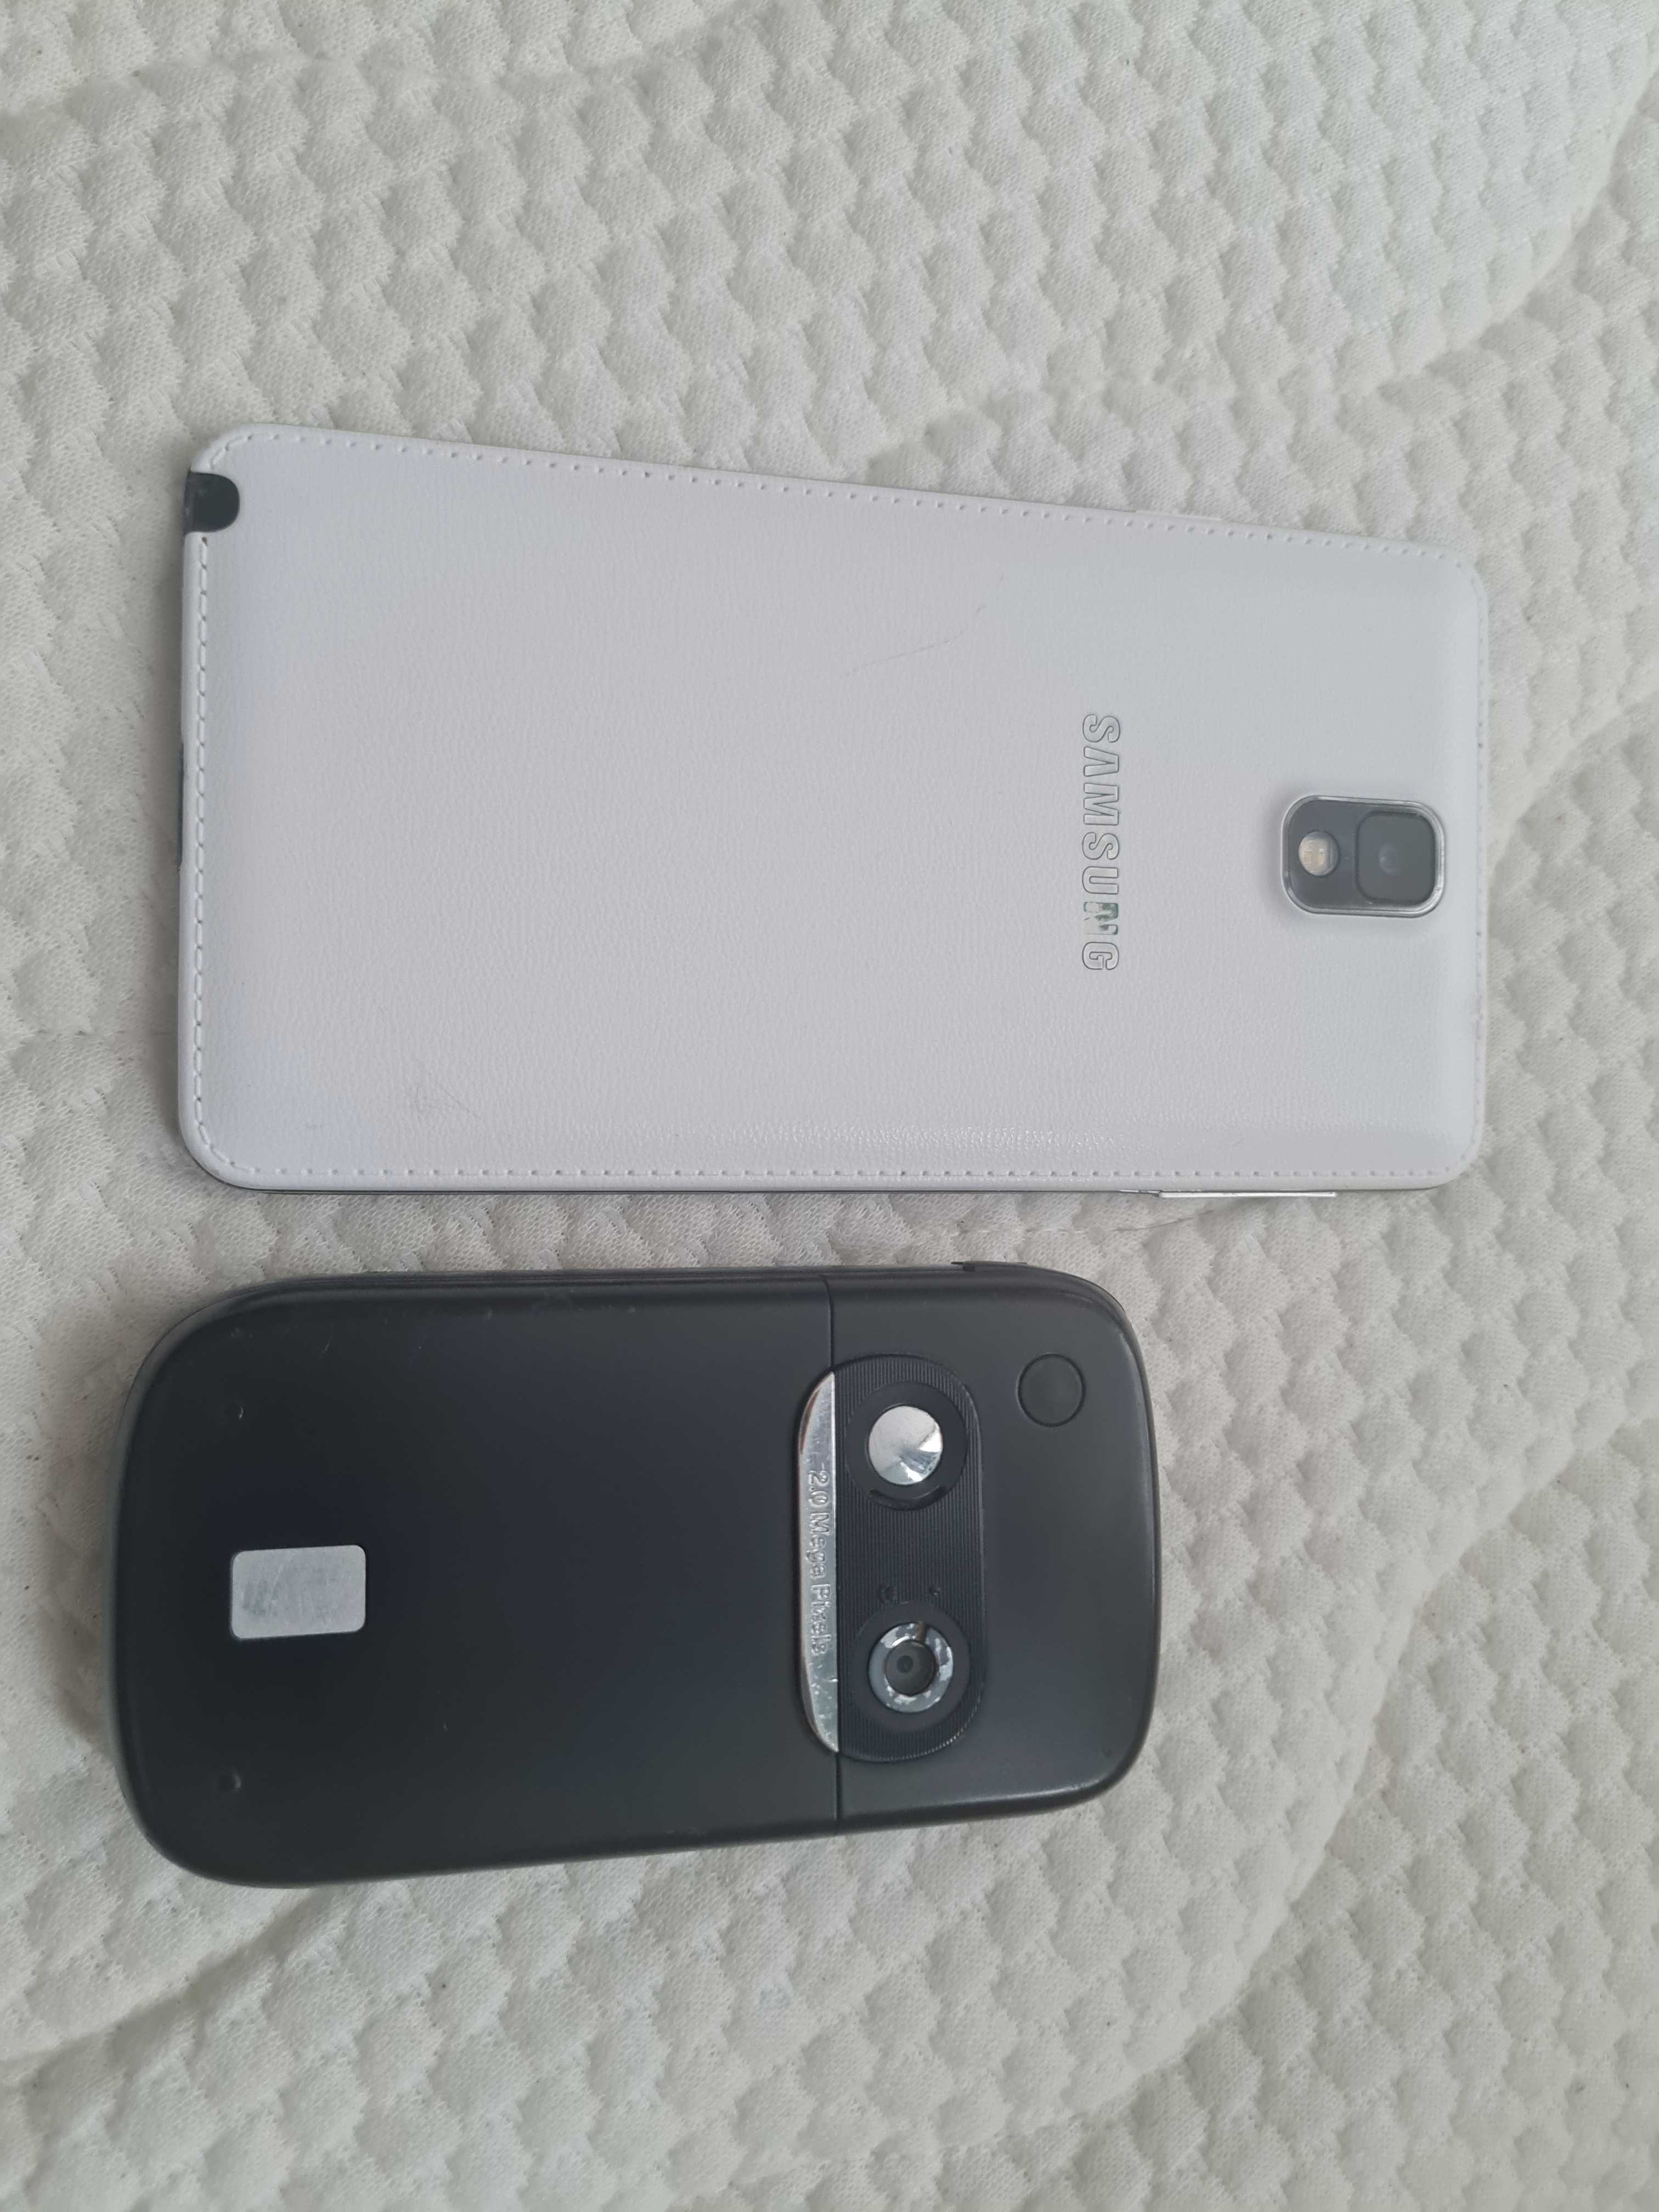 Samsung Galaxy Note 3 и Qtek s200